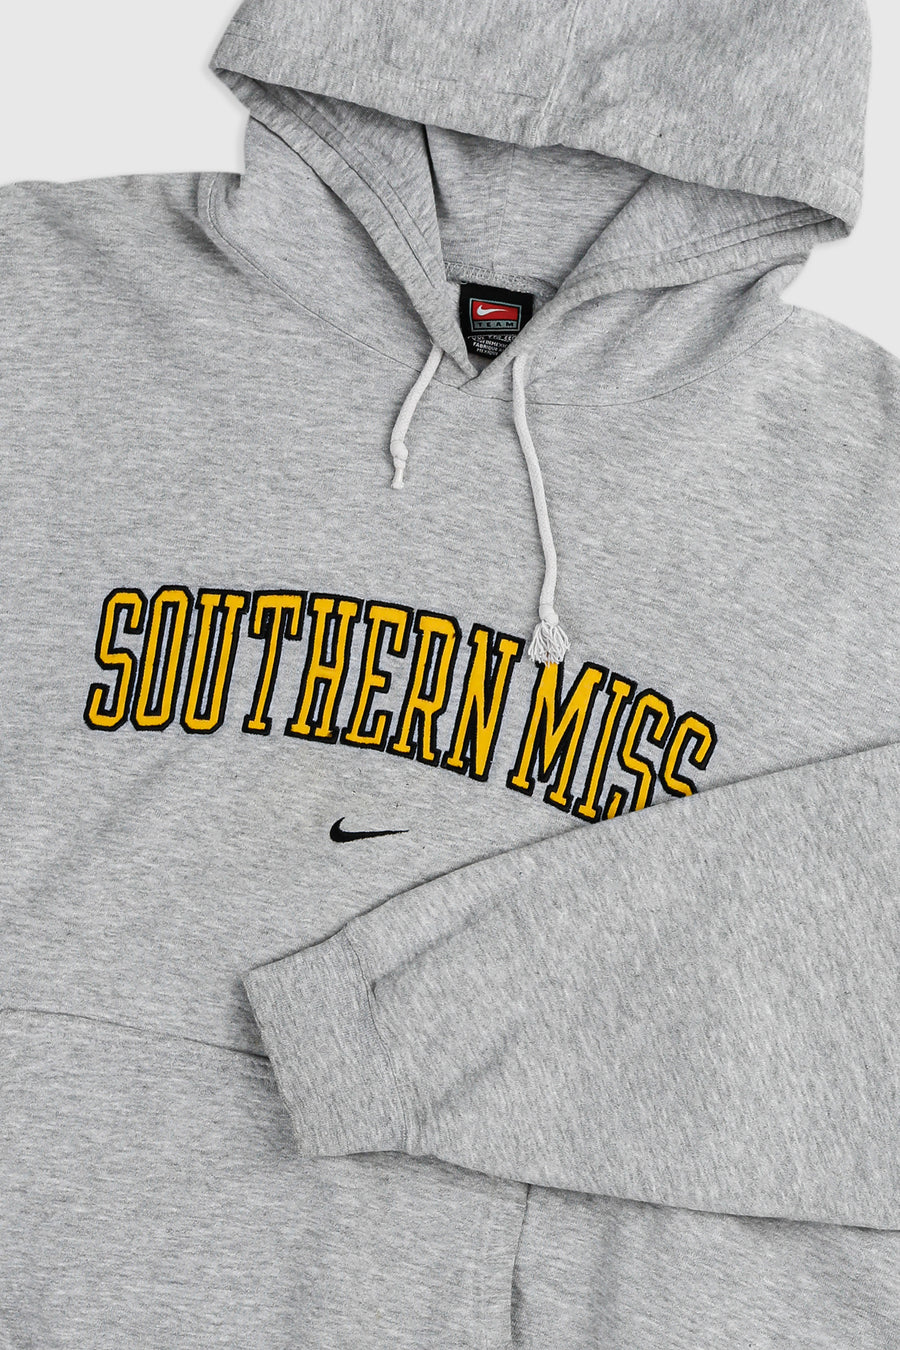 Vintage Nike Southern Mississippi Sweatshirt - XXL